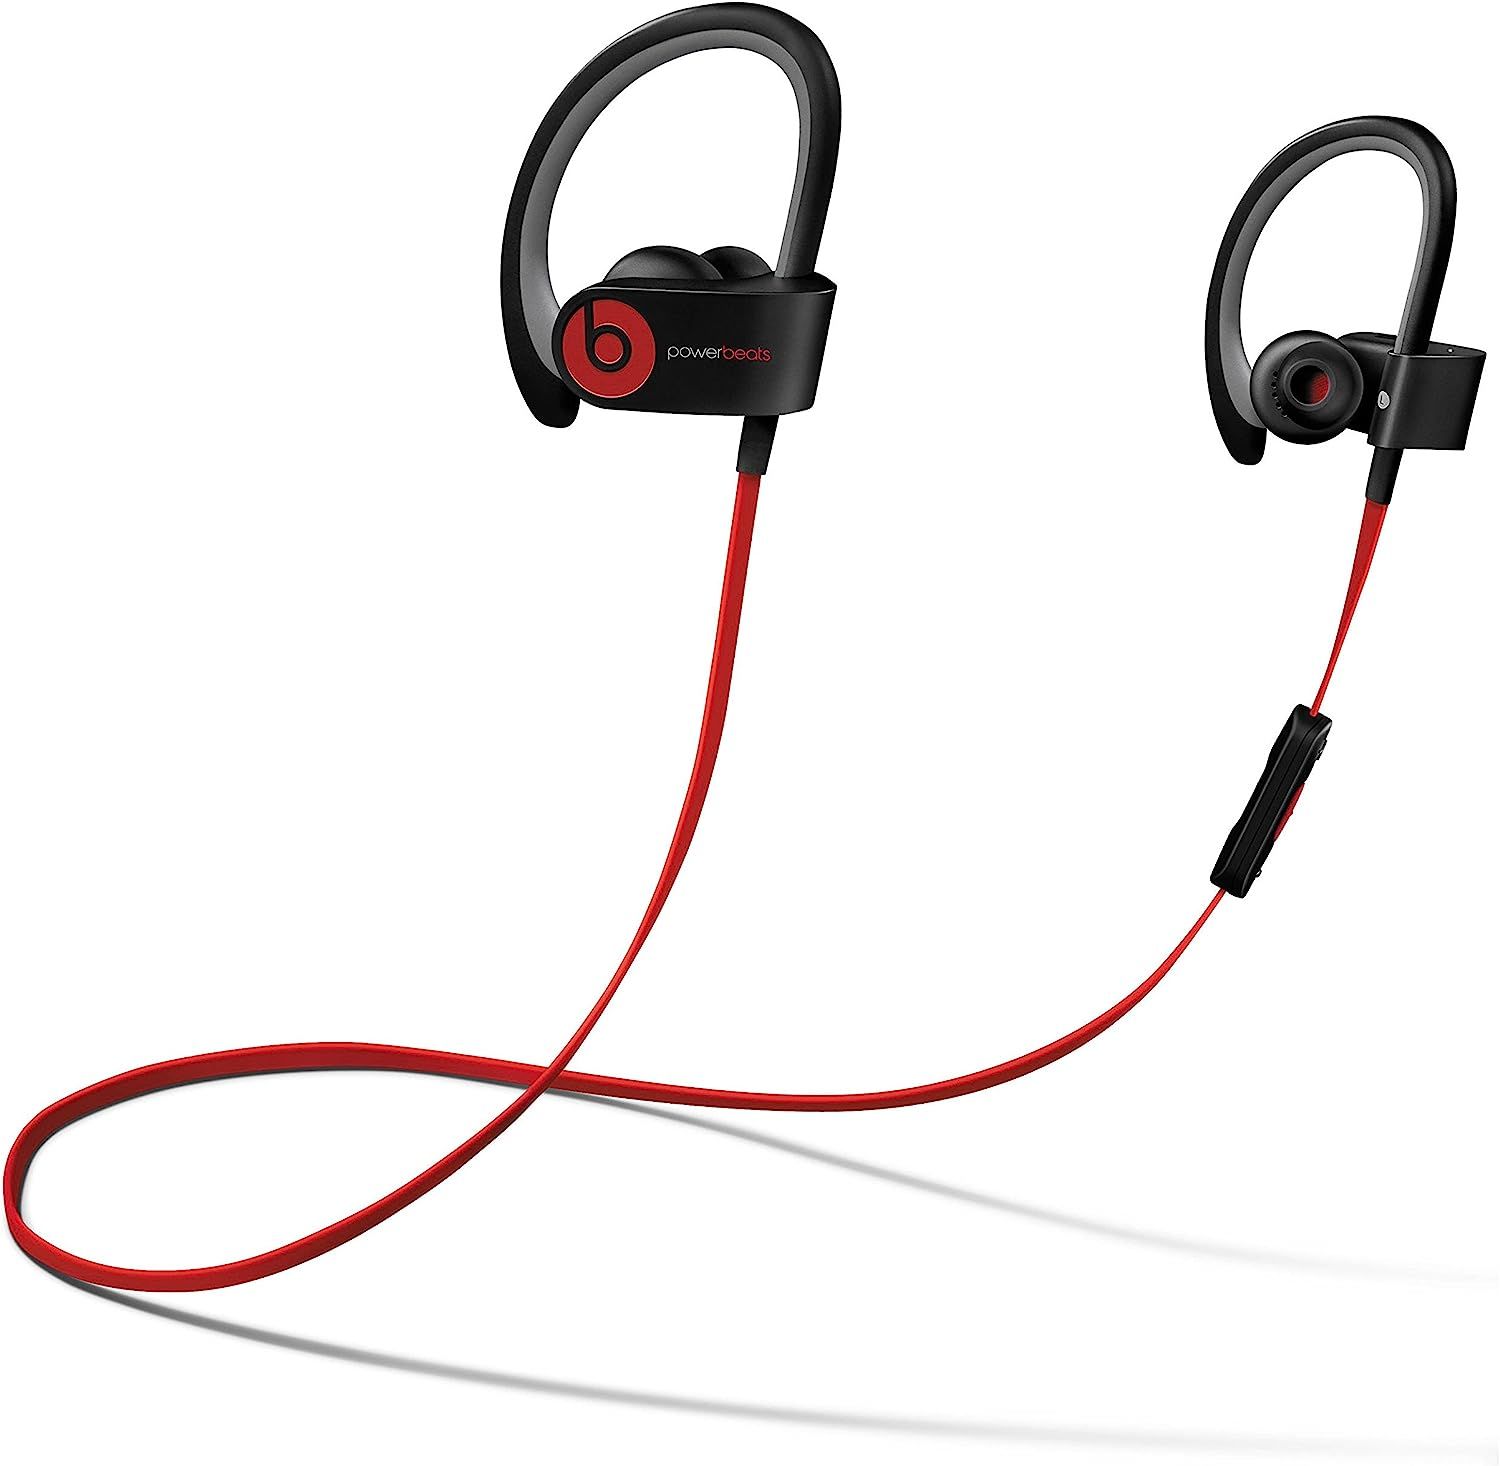 Beats by Dr dre Powerbeats2 Wireless In-Ear Bluetooth Headphone with Mic - Black (Renewed) | Amazon (US)